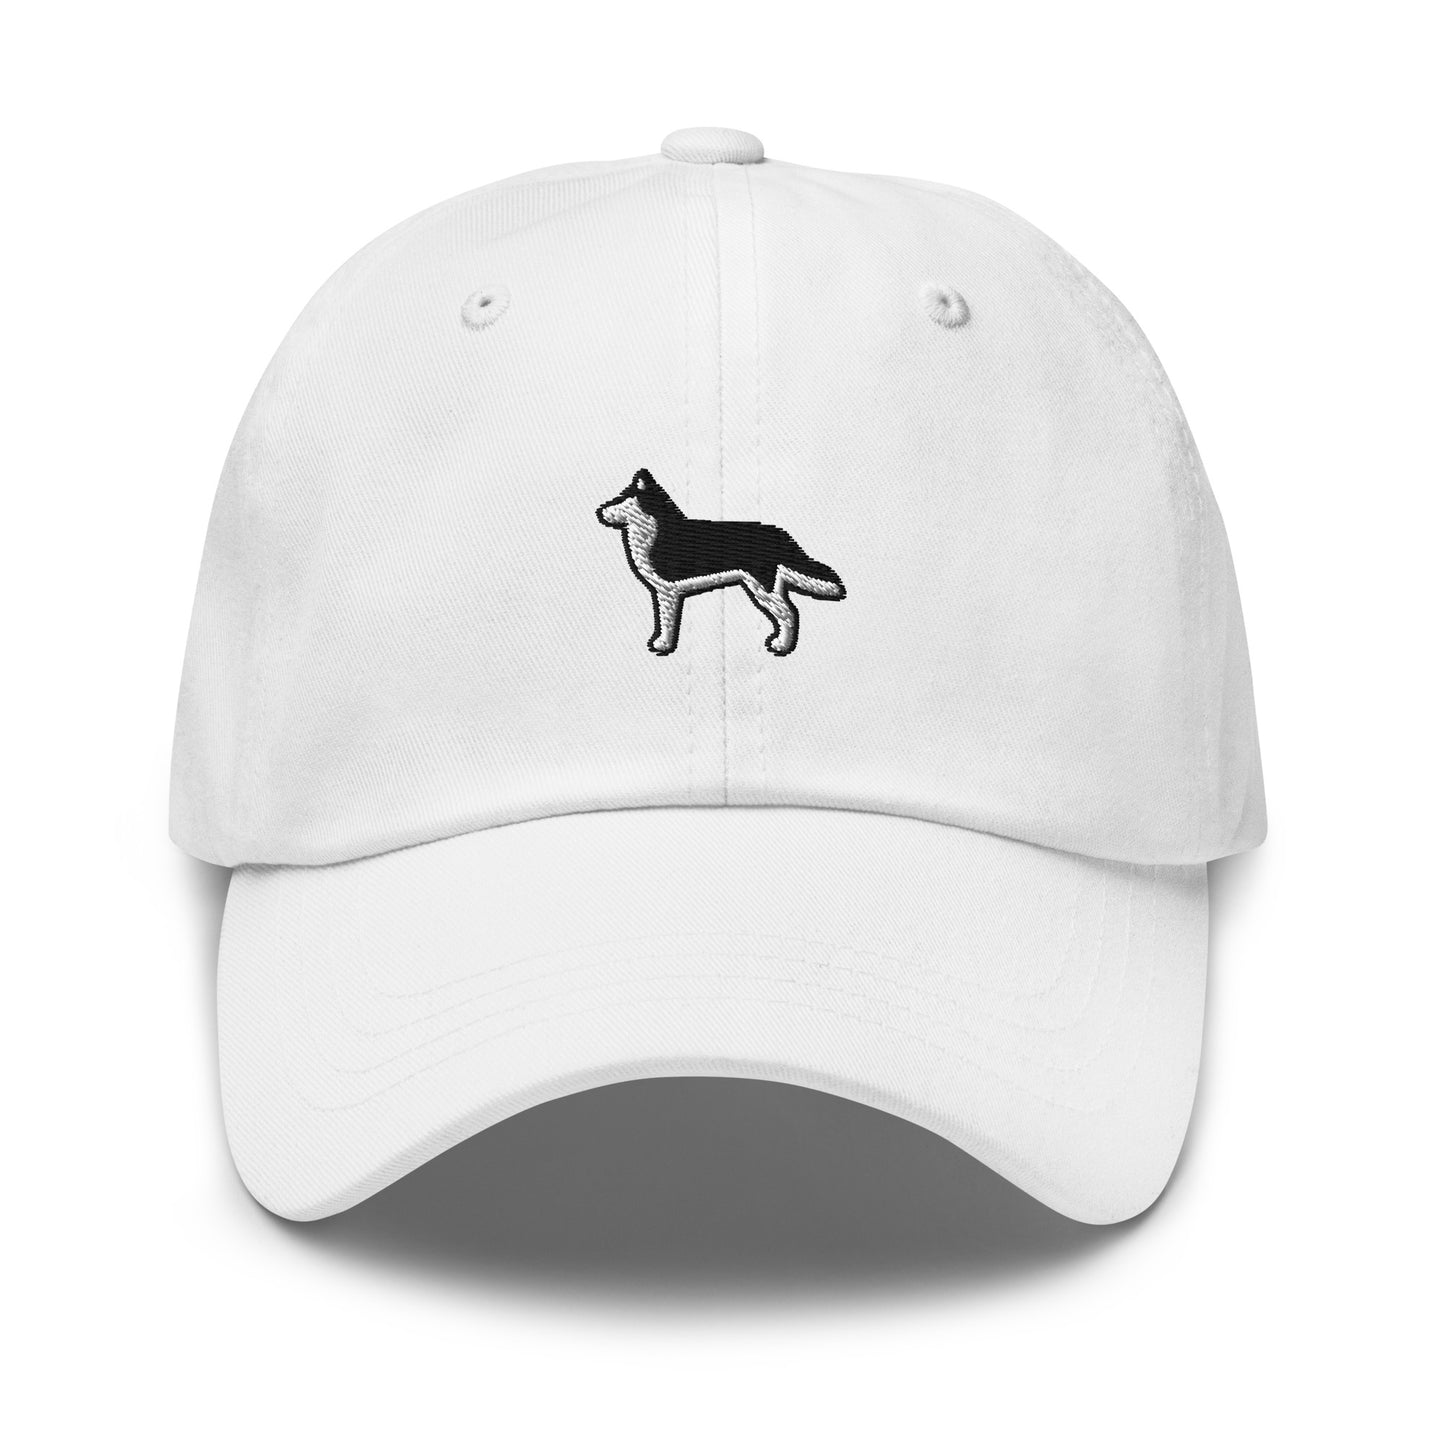 Siberian Husky Dog Embroidered Baseball Cap